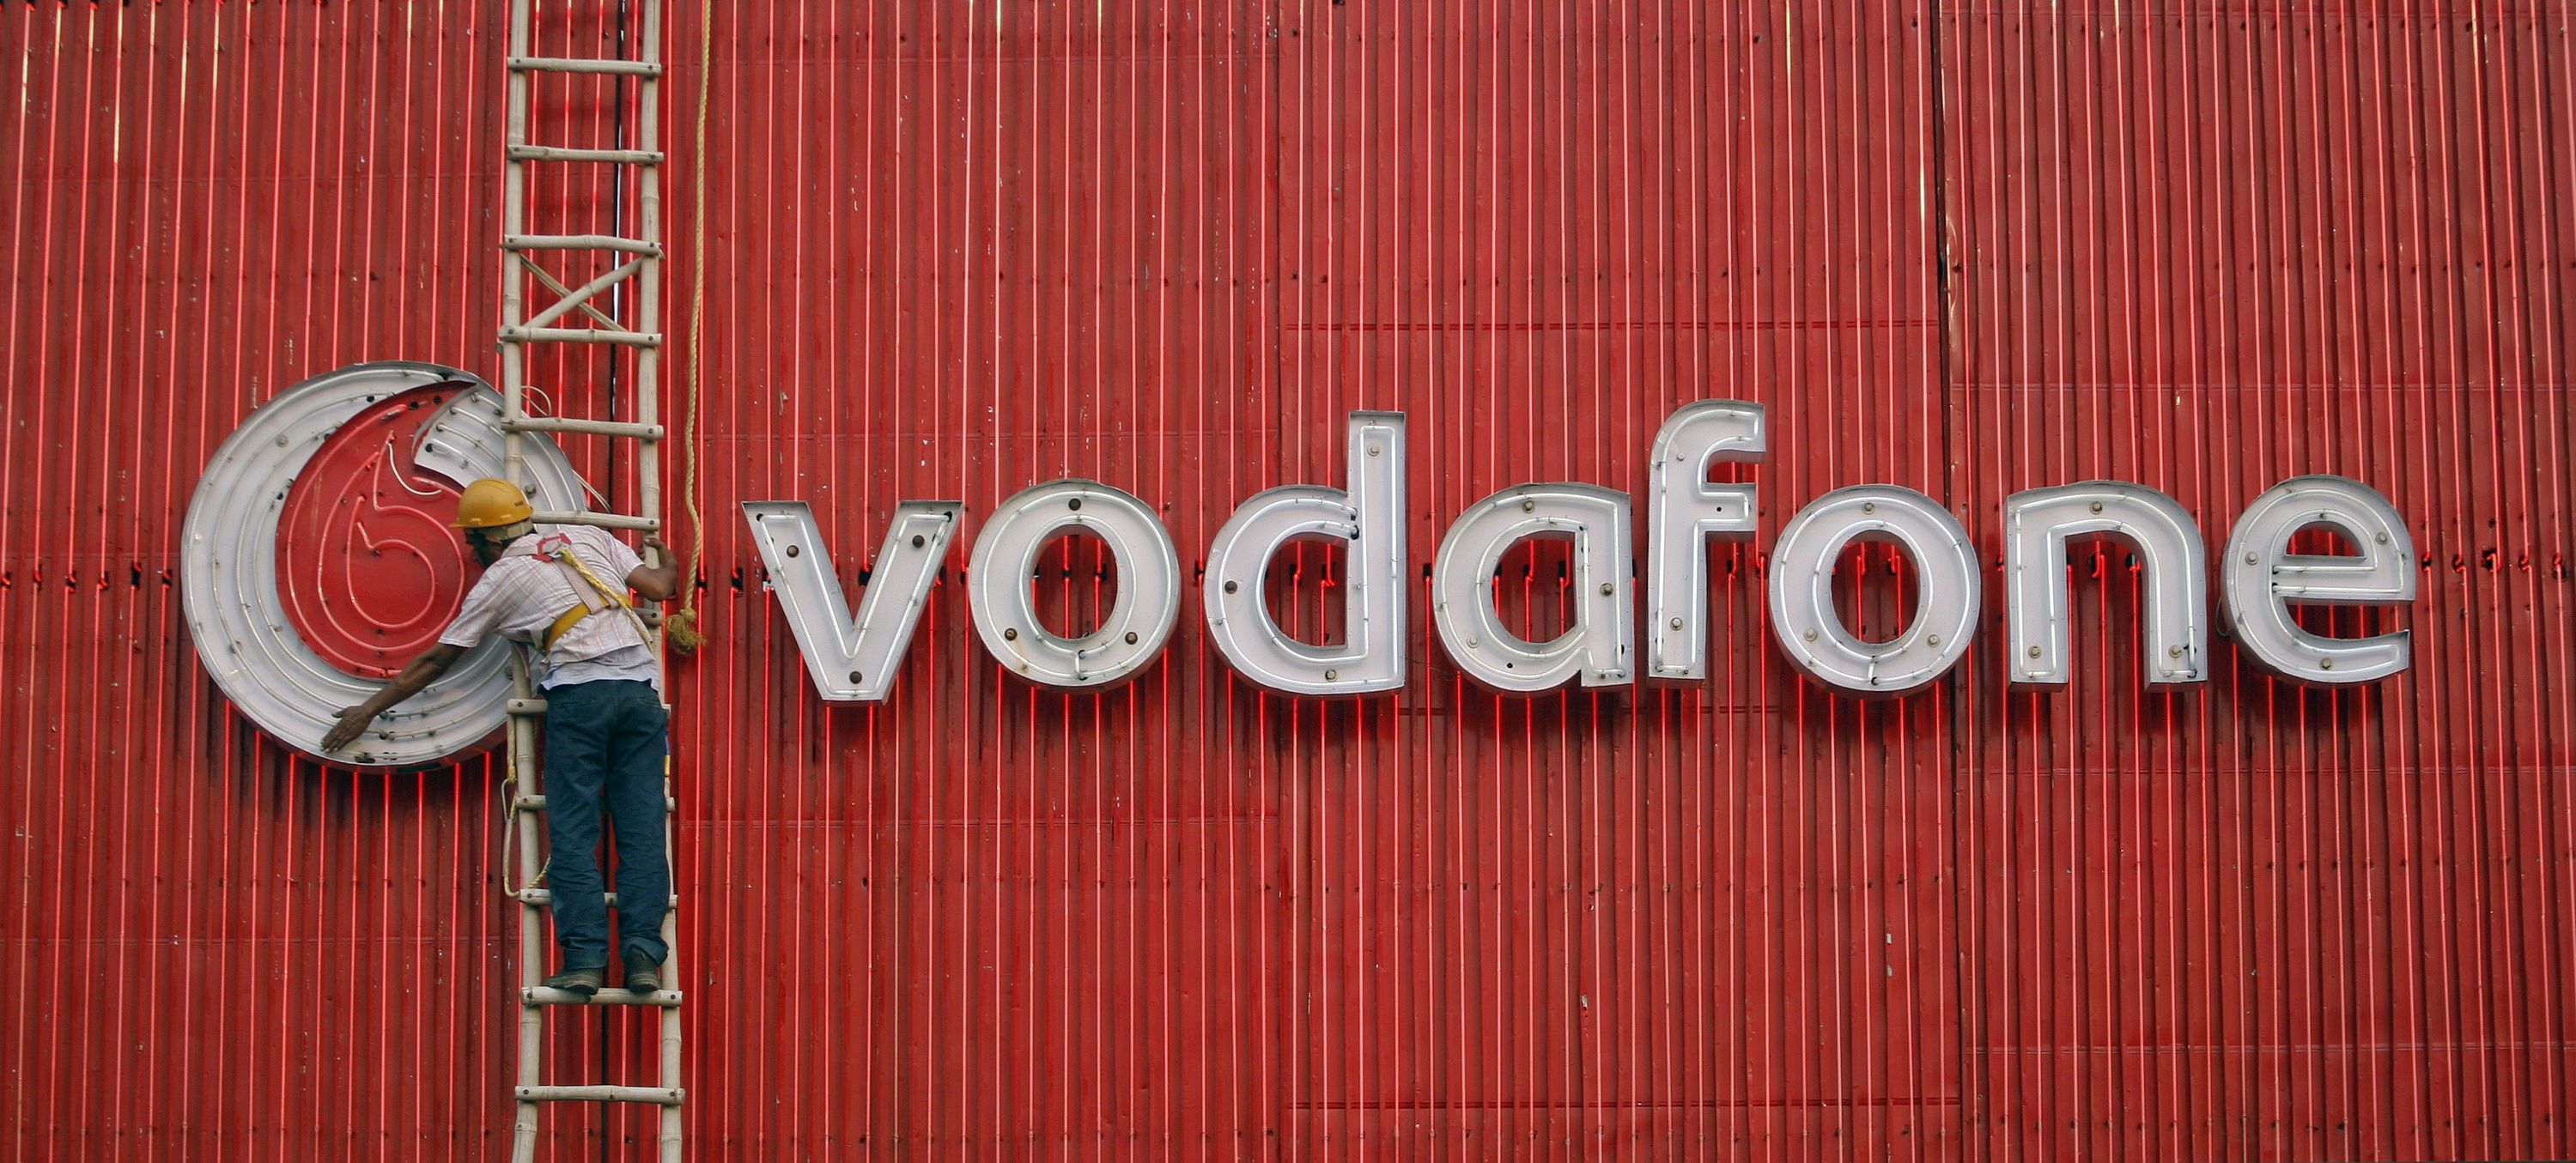 Vodafone Ghana Internet